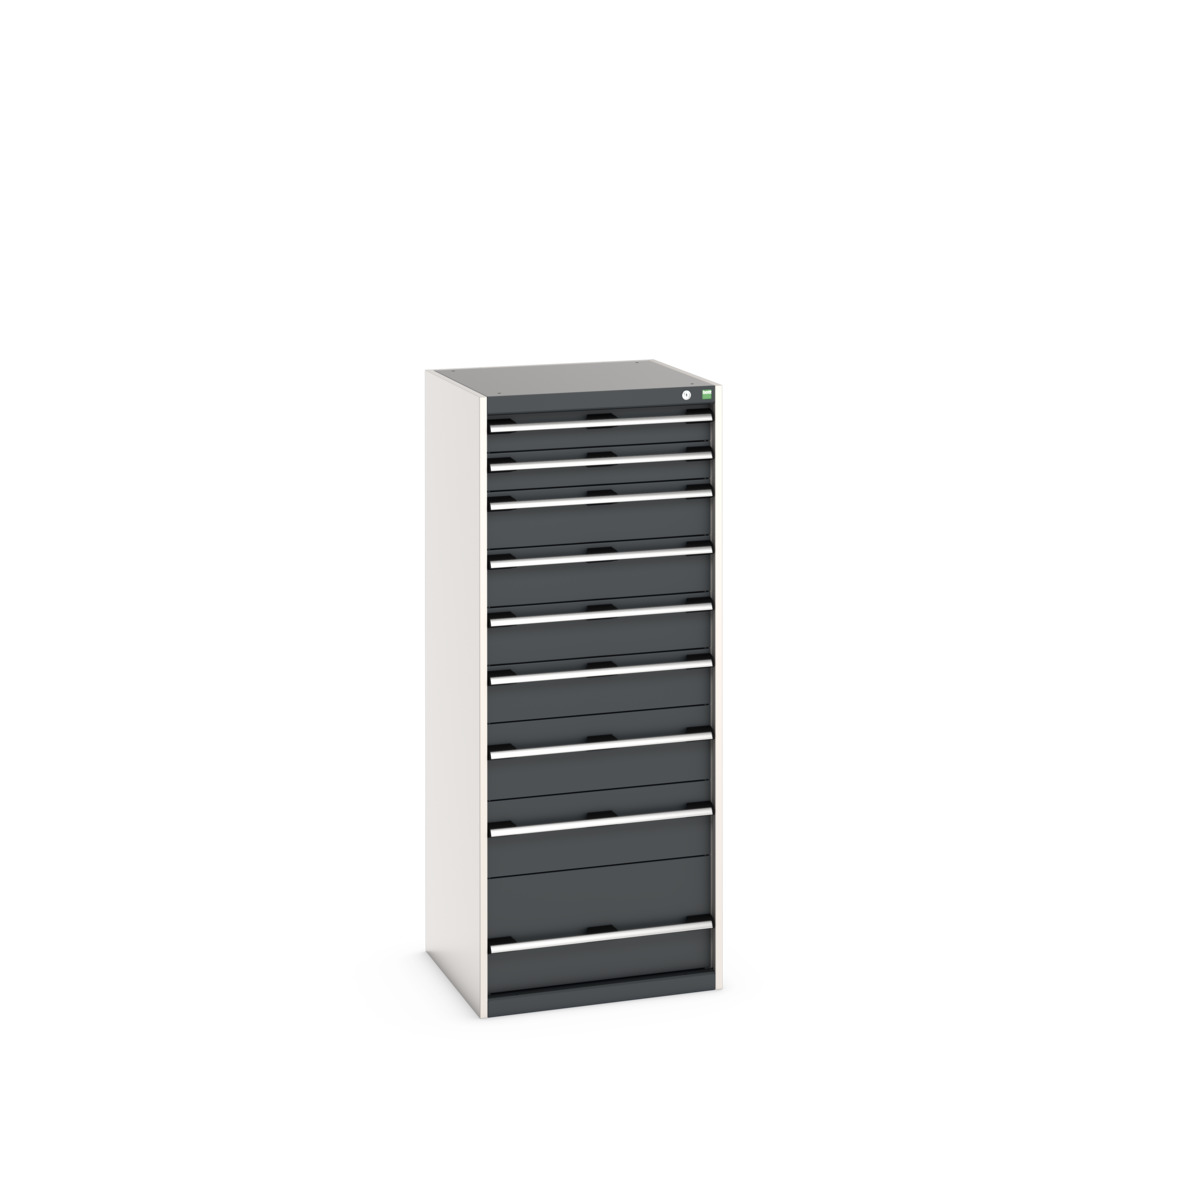 40019154. - cubio drawer cabinet